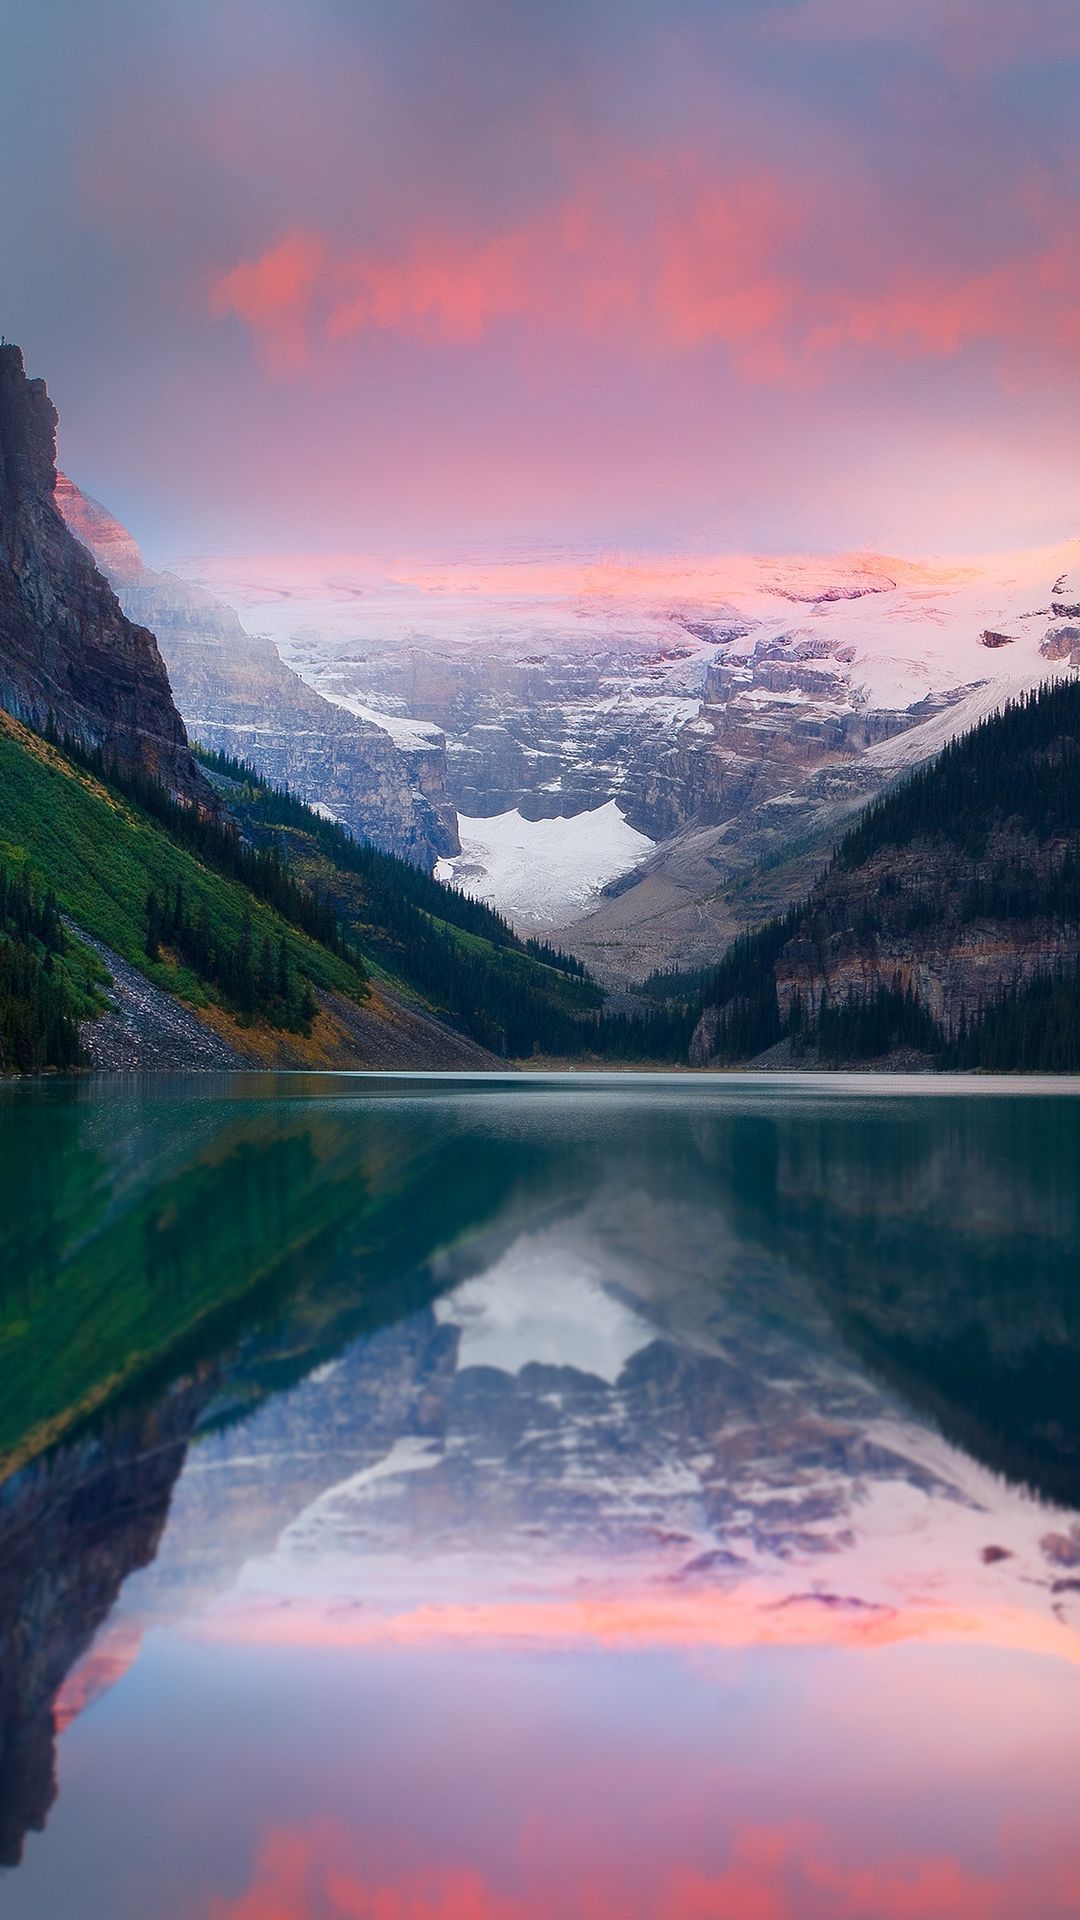 1080x1920 wallpaper.<ref> Lake Louise</ref><box>(7,169),(993,995)</box>, Canada, with a mountain and a lake - Lake